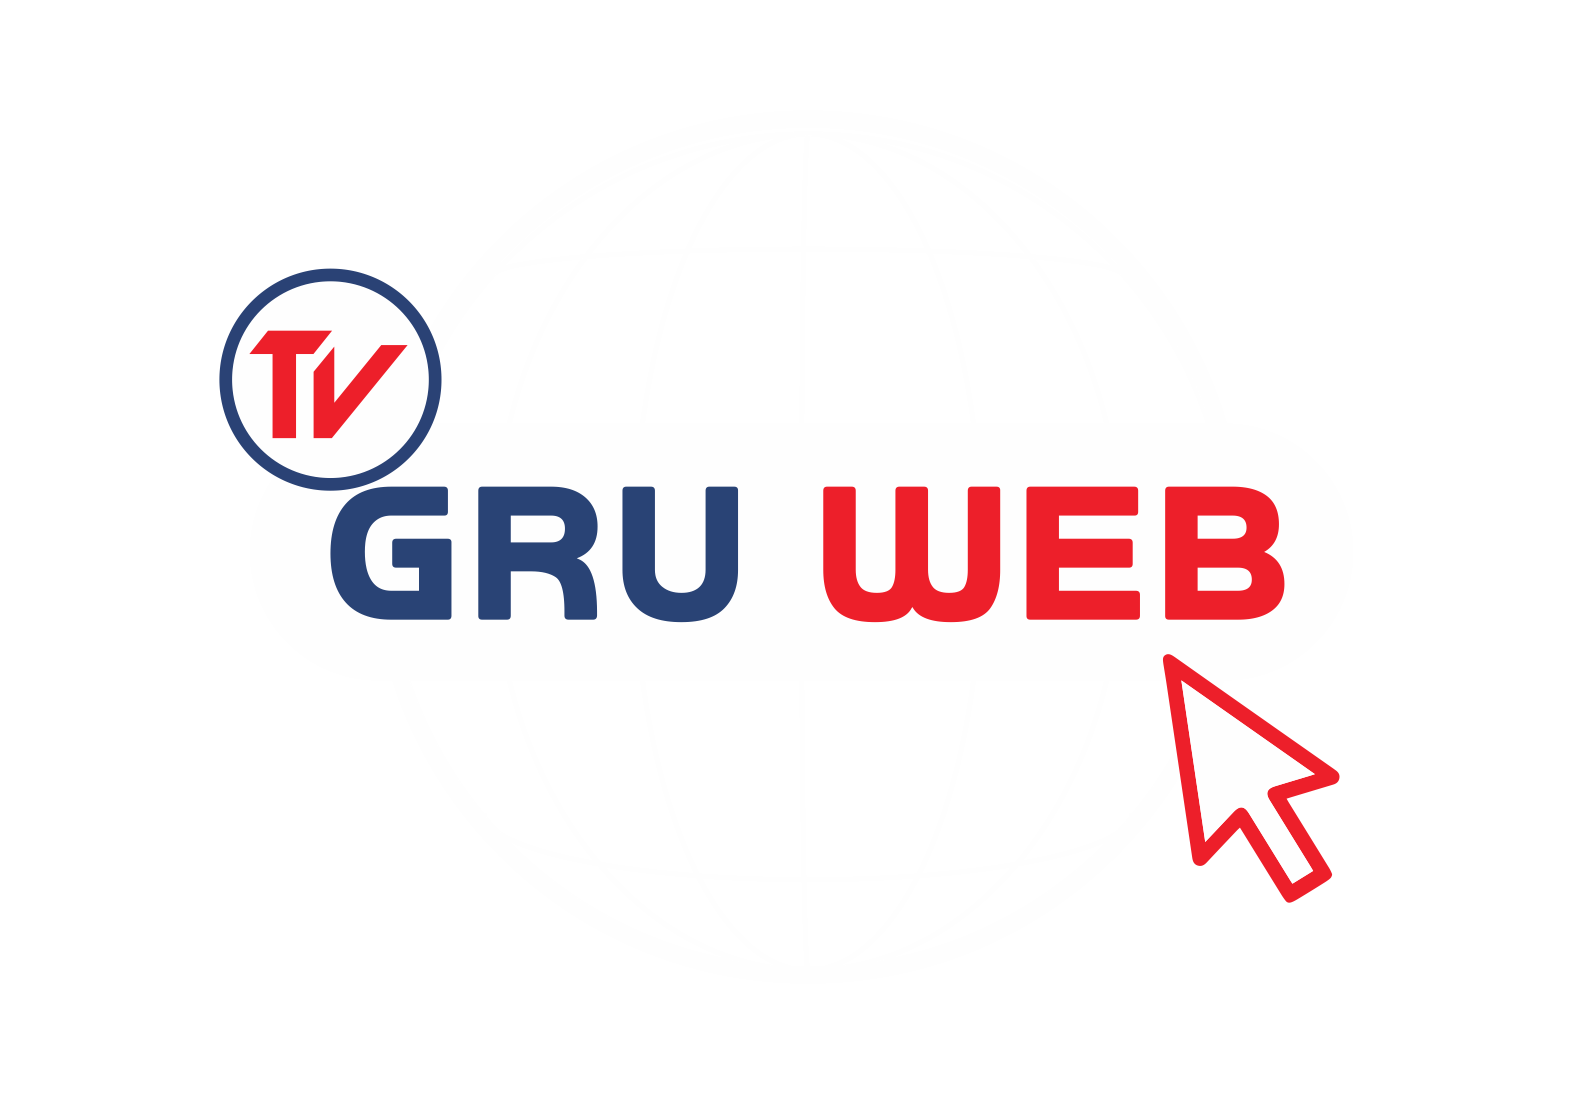 Site TV Gru Web